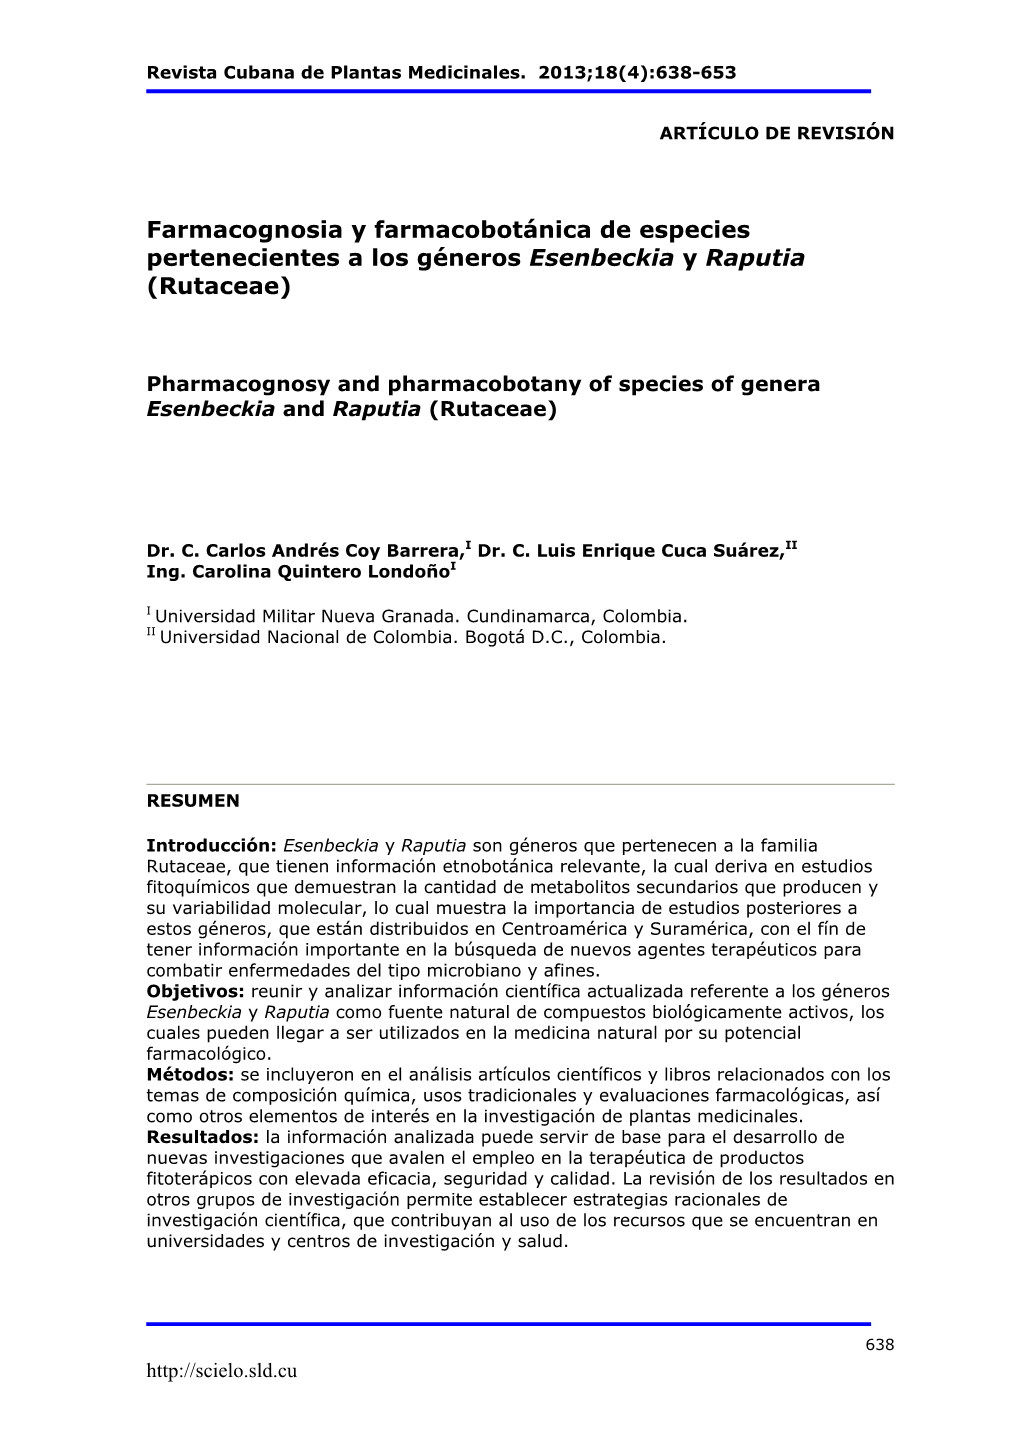 Pharmacognosy and Pharmacobotany of Species of Genera Esenbeckia and Raputia (Rutaceae)